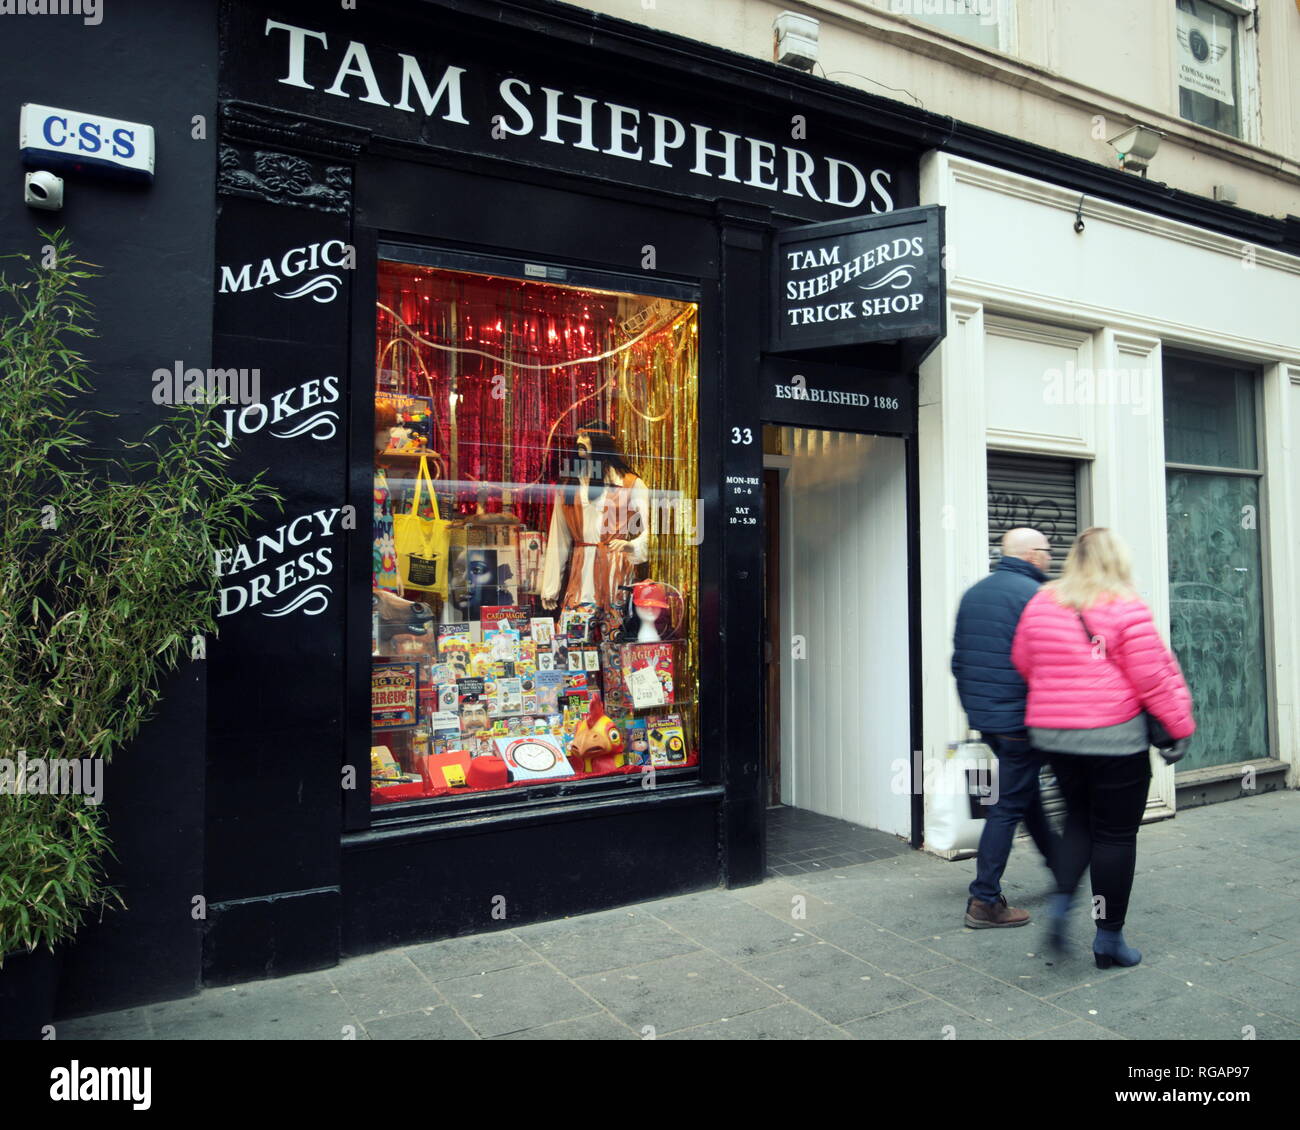 Tam Shepherds Trick Shop 33 Queen St, Glasgow G1 3EF  Glasgow, Scotland,UK Stock Photo